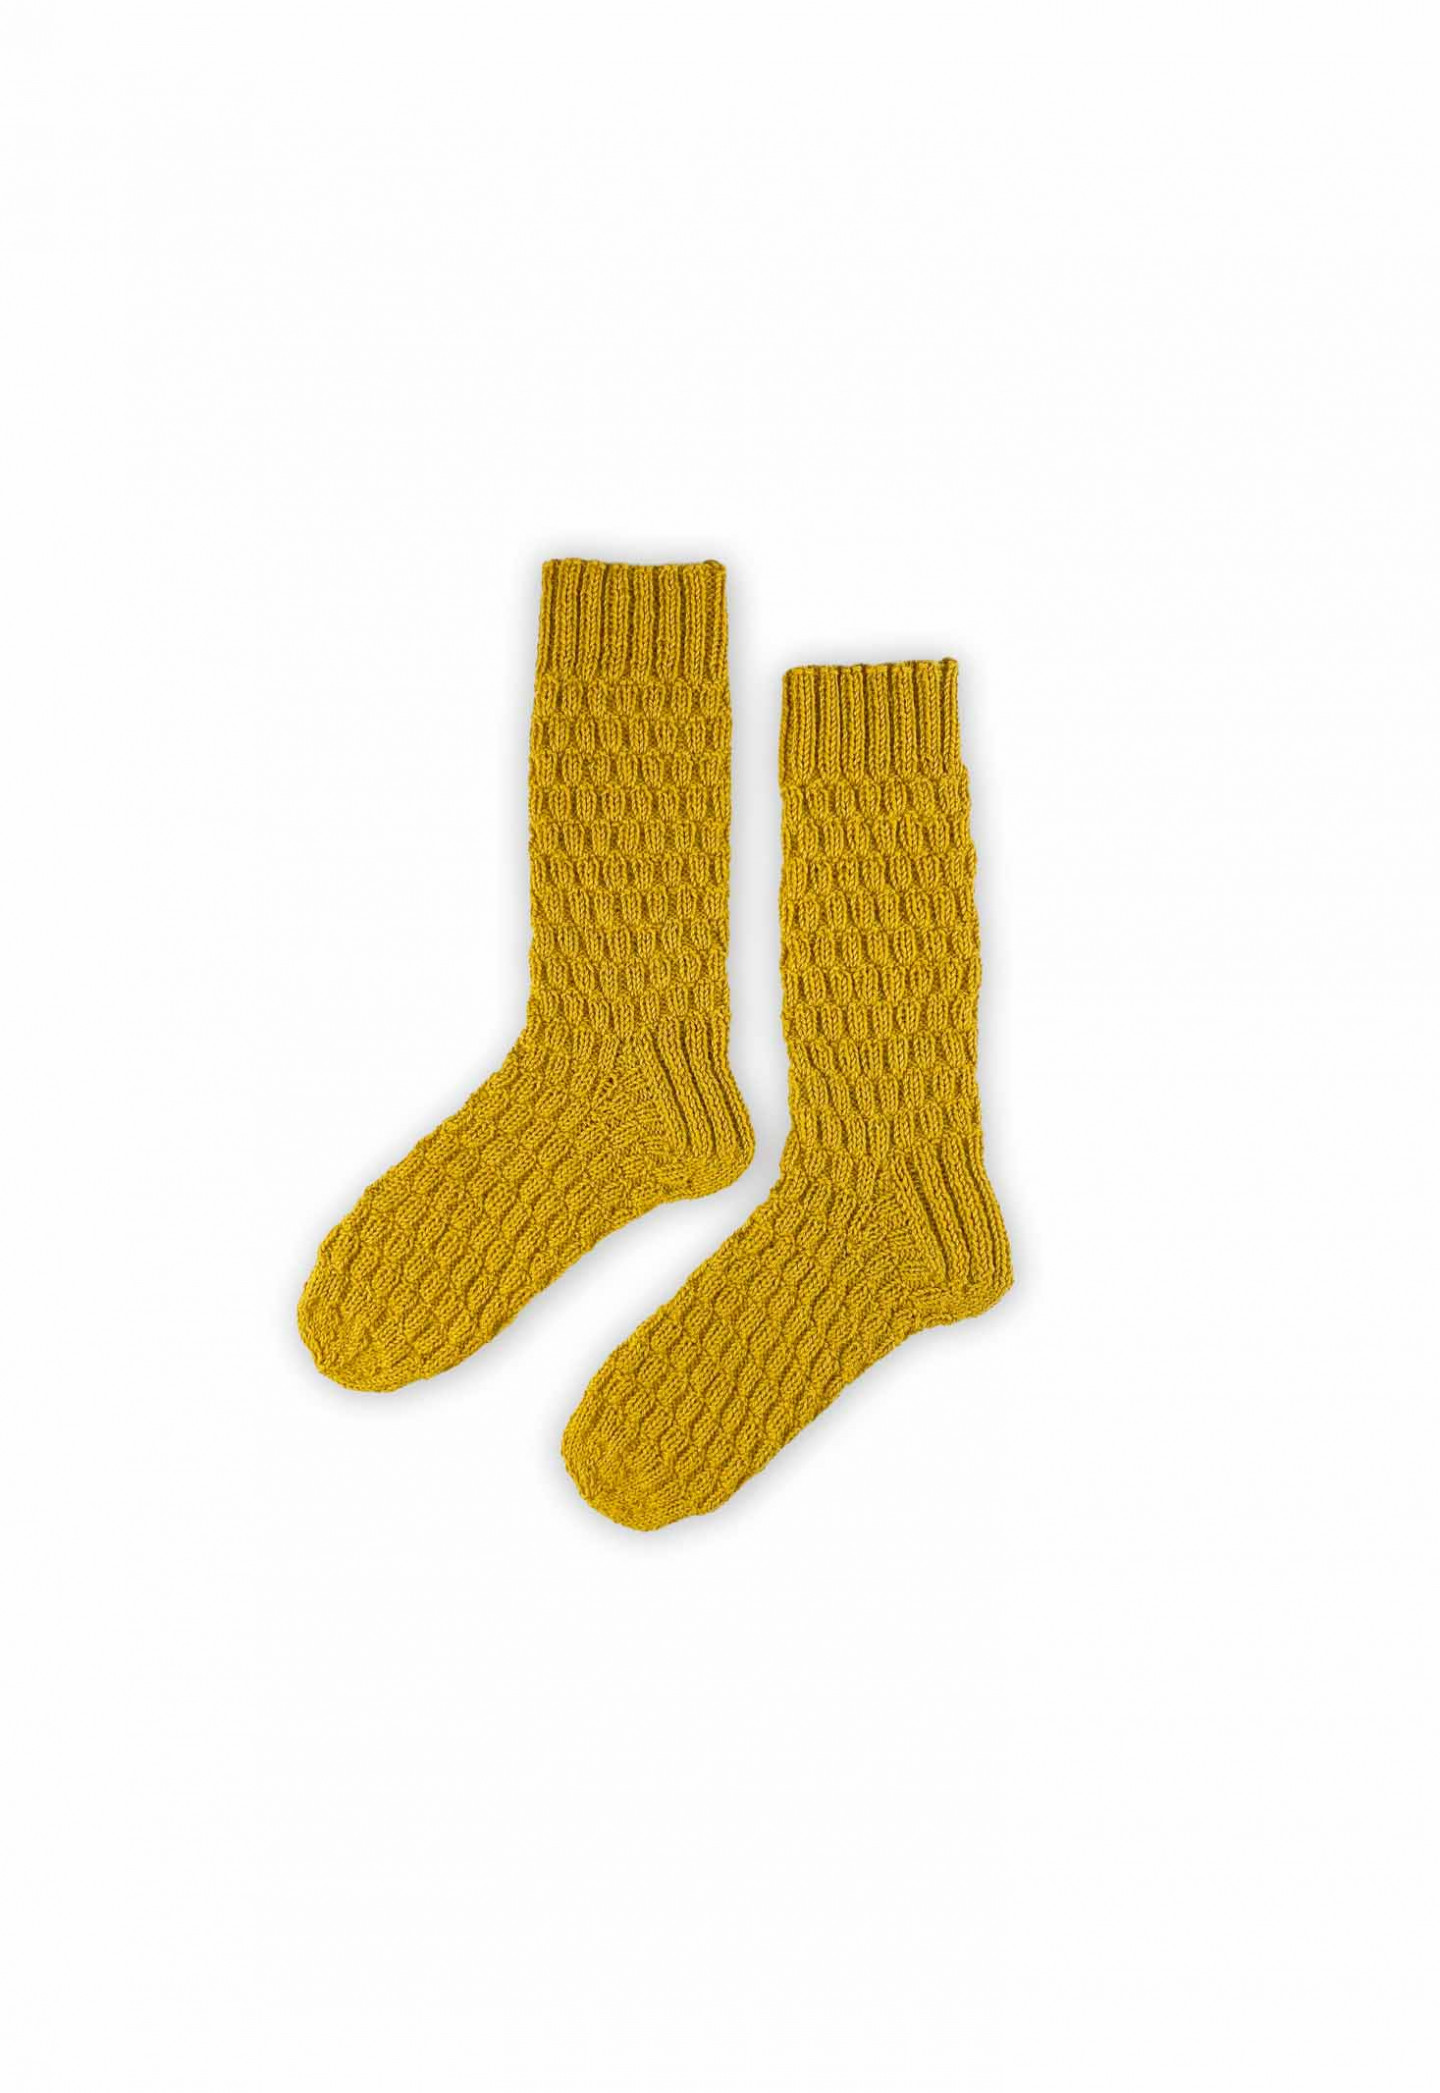 Anne Marie's Socks